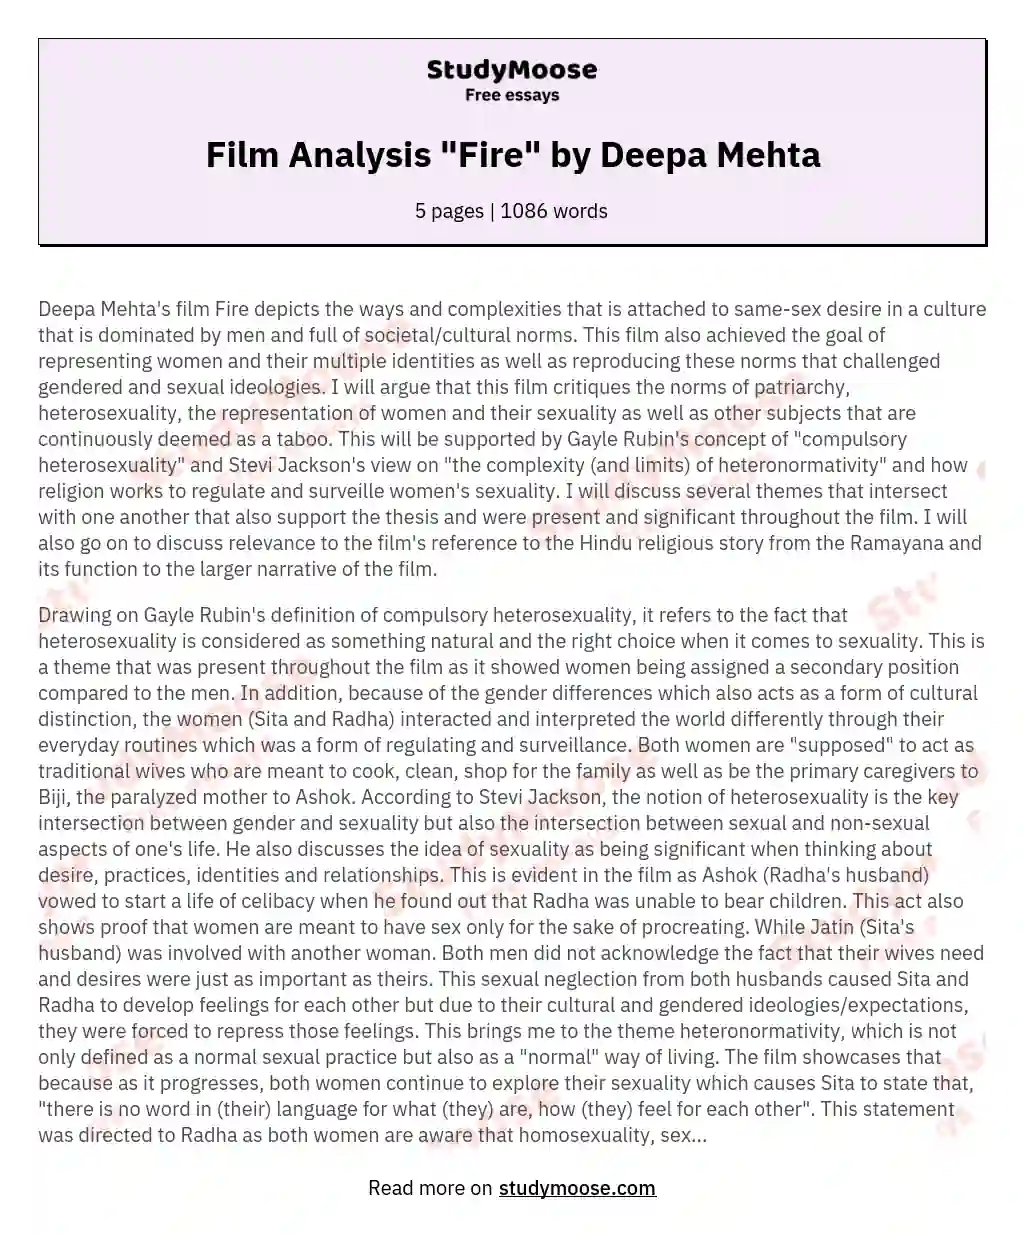 Film Analysis "Fire" by Deepa Mehta essay